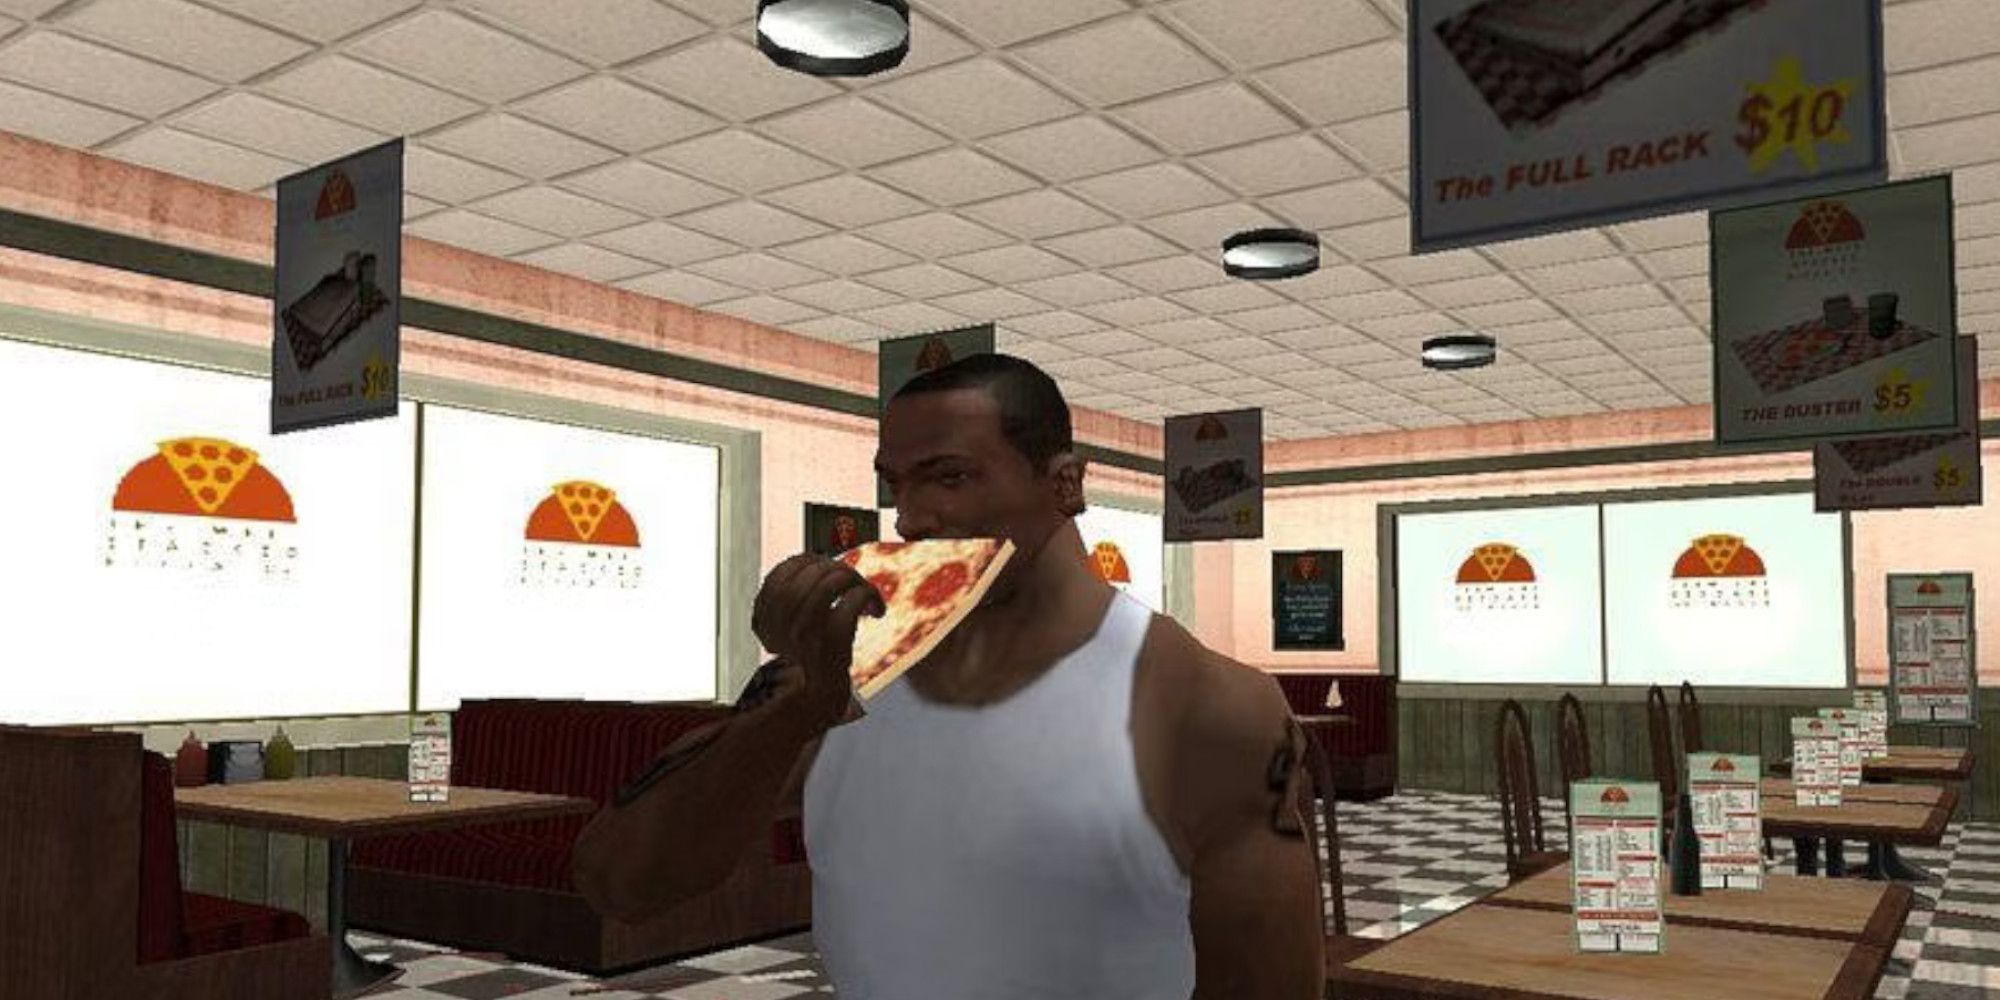 CJ eats a piece of pizza